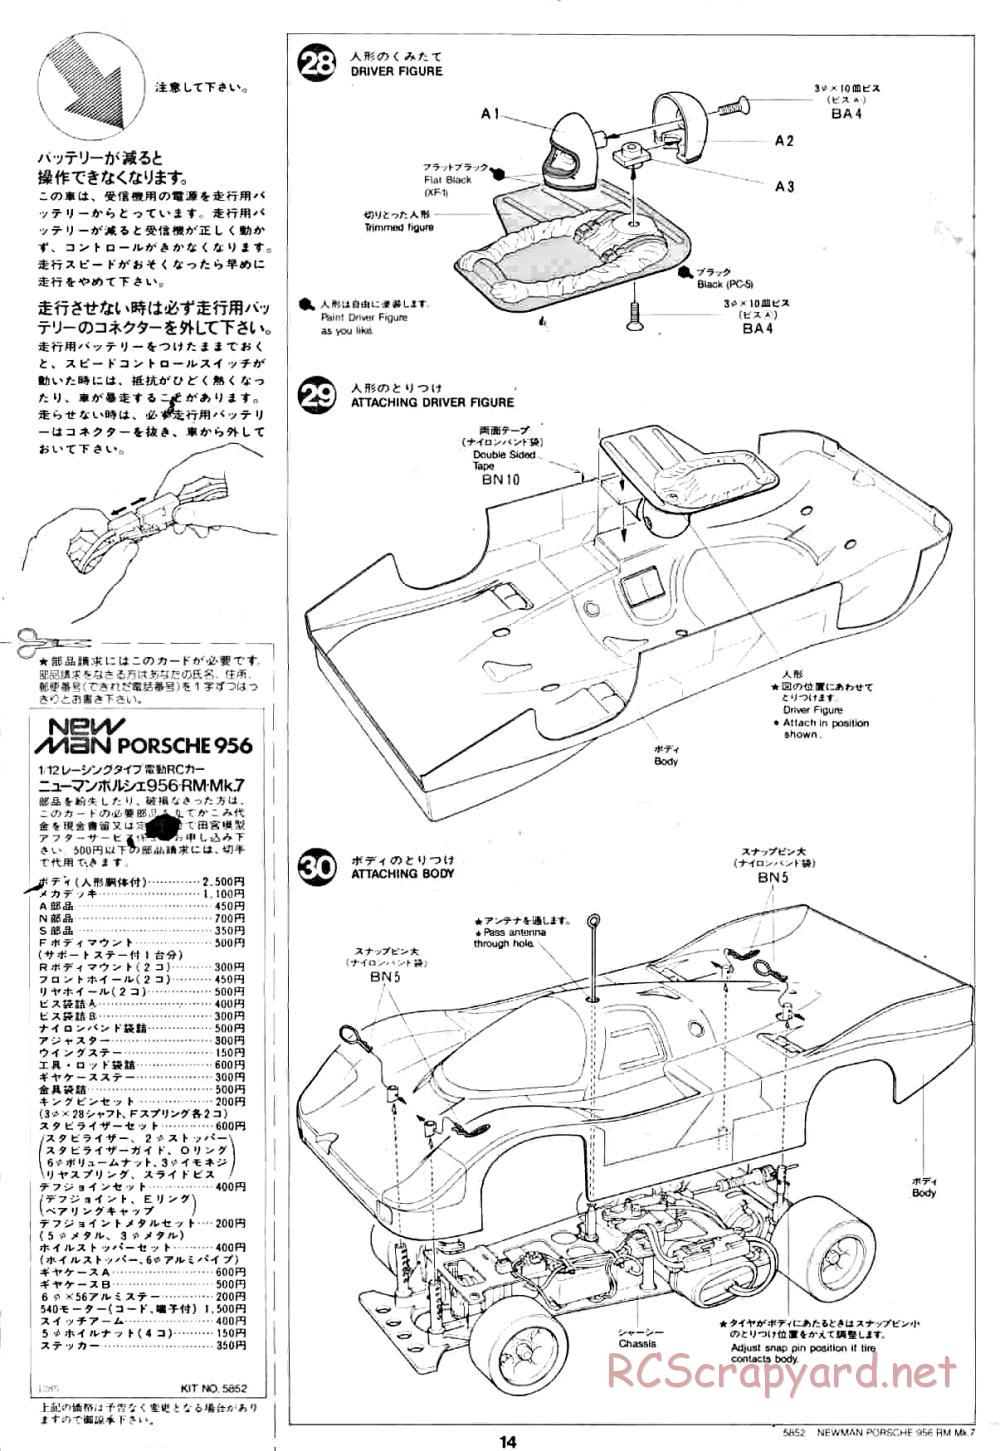 Tamiya - Newman Prsch 956 - RM MK.7 - 58052 - Manual - Page 14